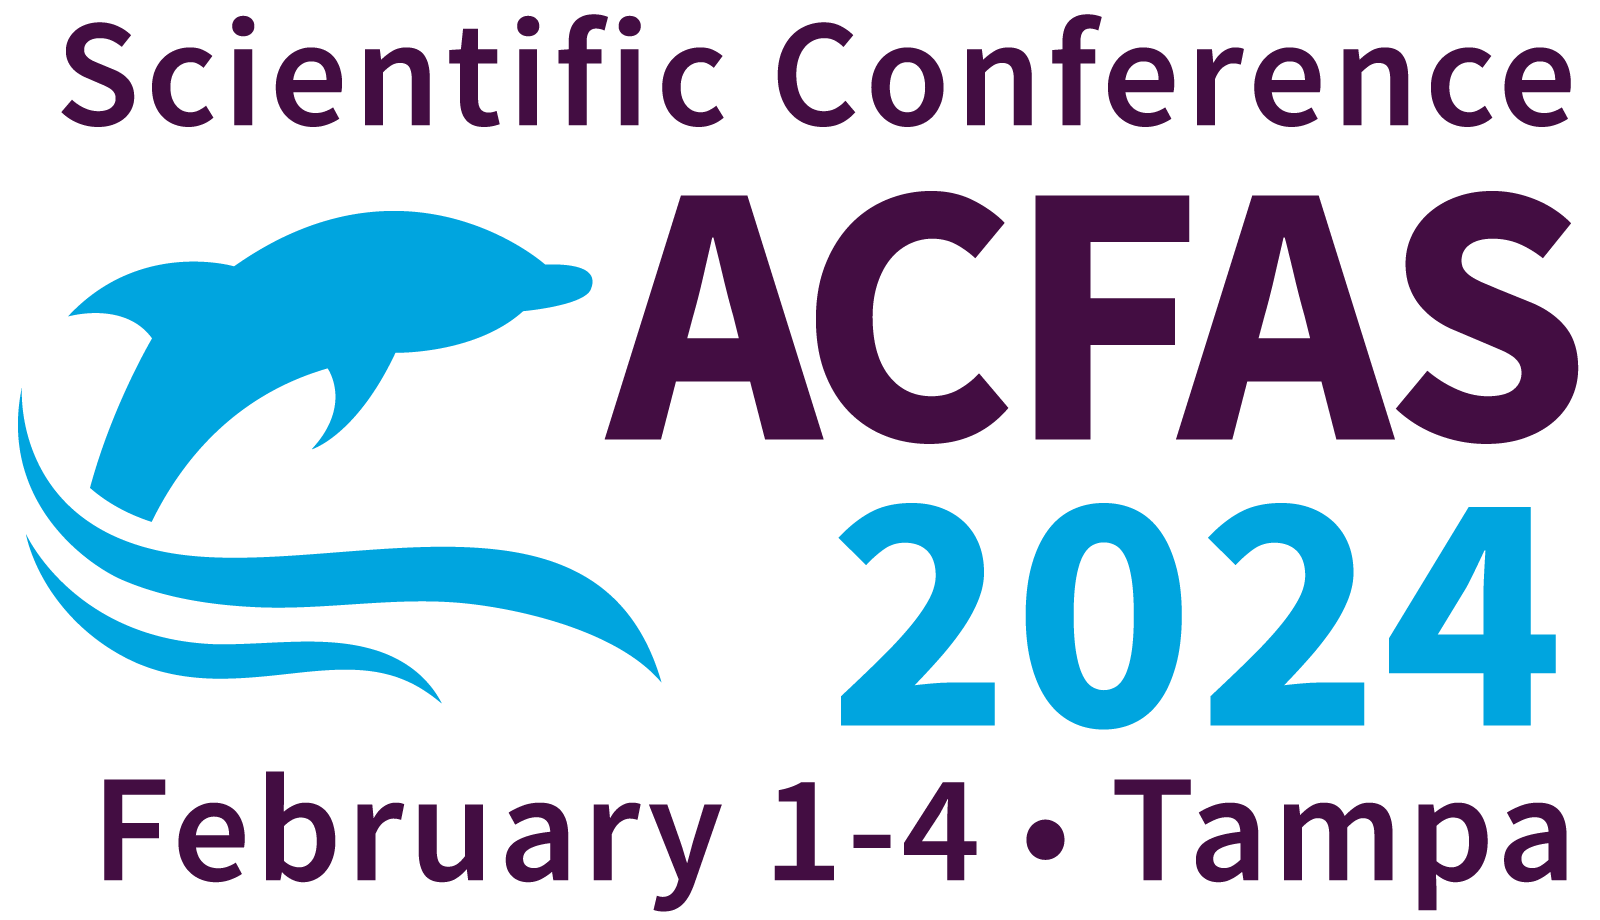 ACFAS Annual Scientific Conference